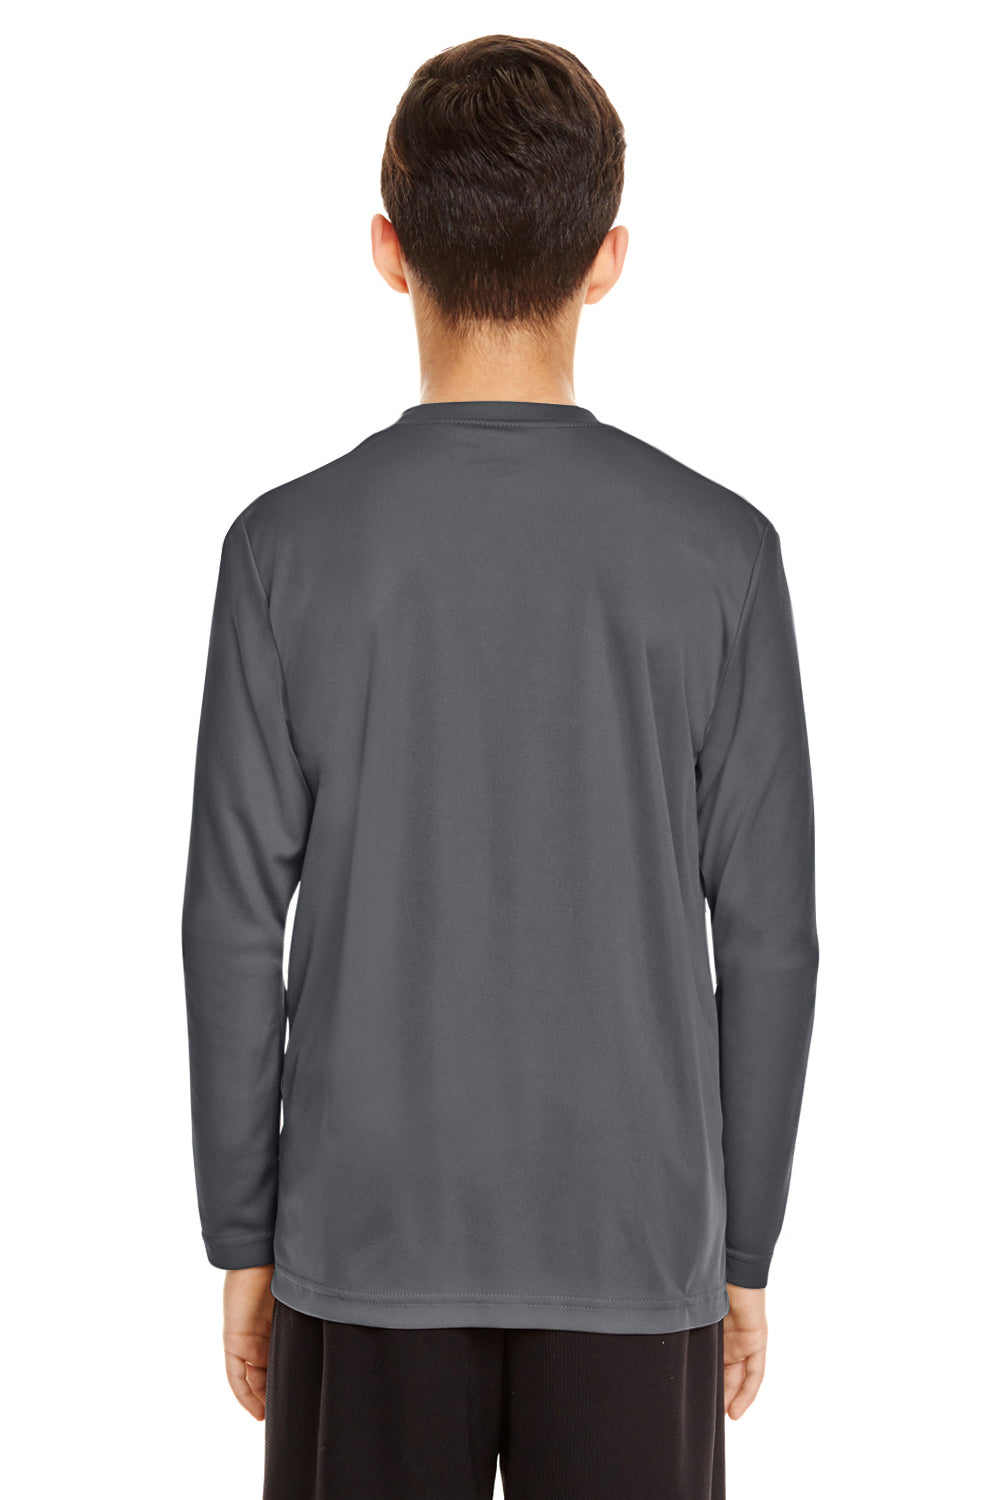 Team 365 TT11YL Youth Zone Performance Moisture Wicking Long Sleeve Crewneck T-Shirt Graphite Grey Back